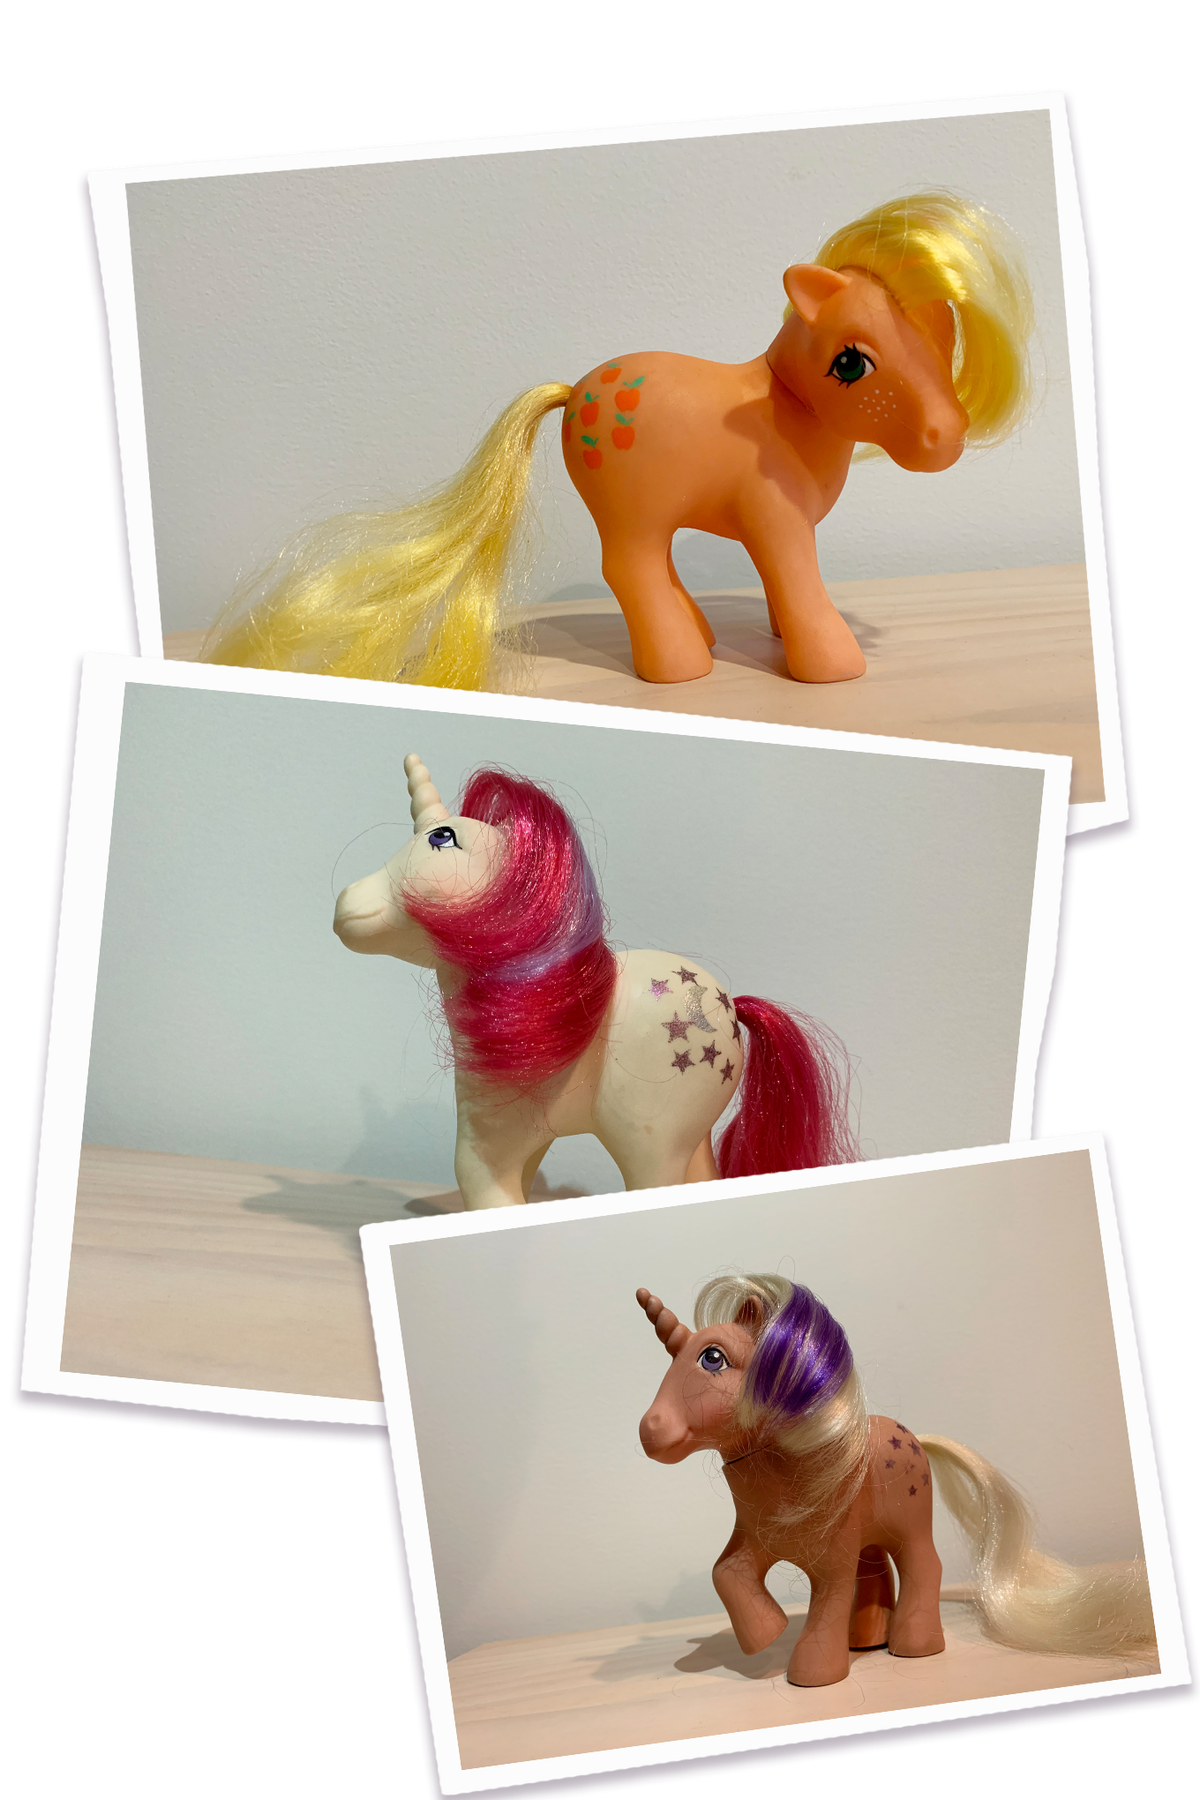 Three photos of My Little Pony toys